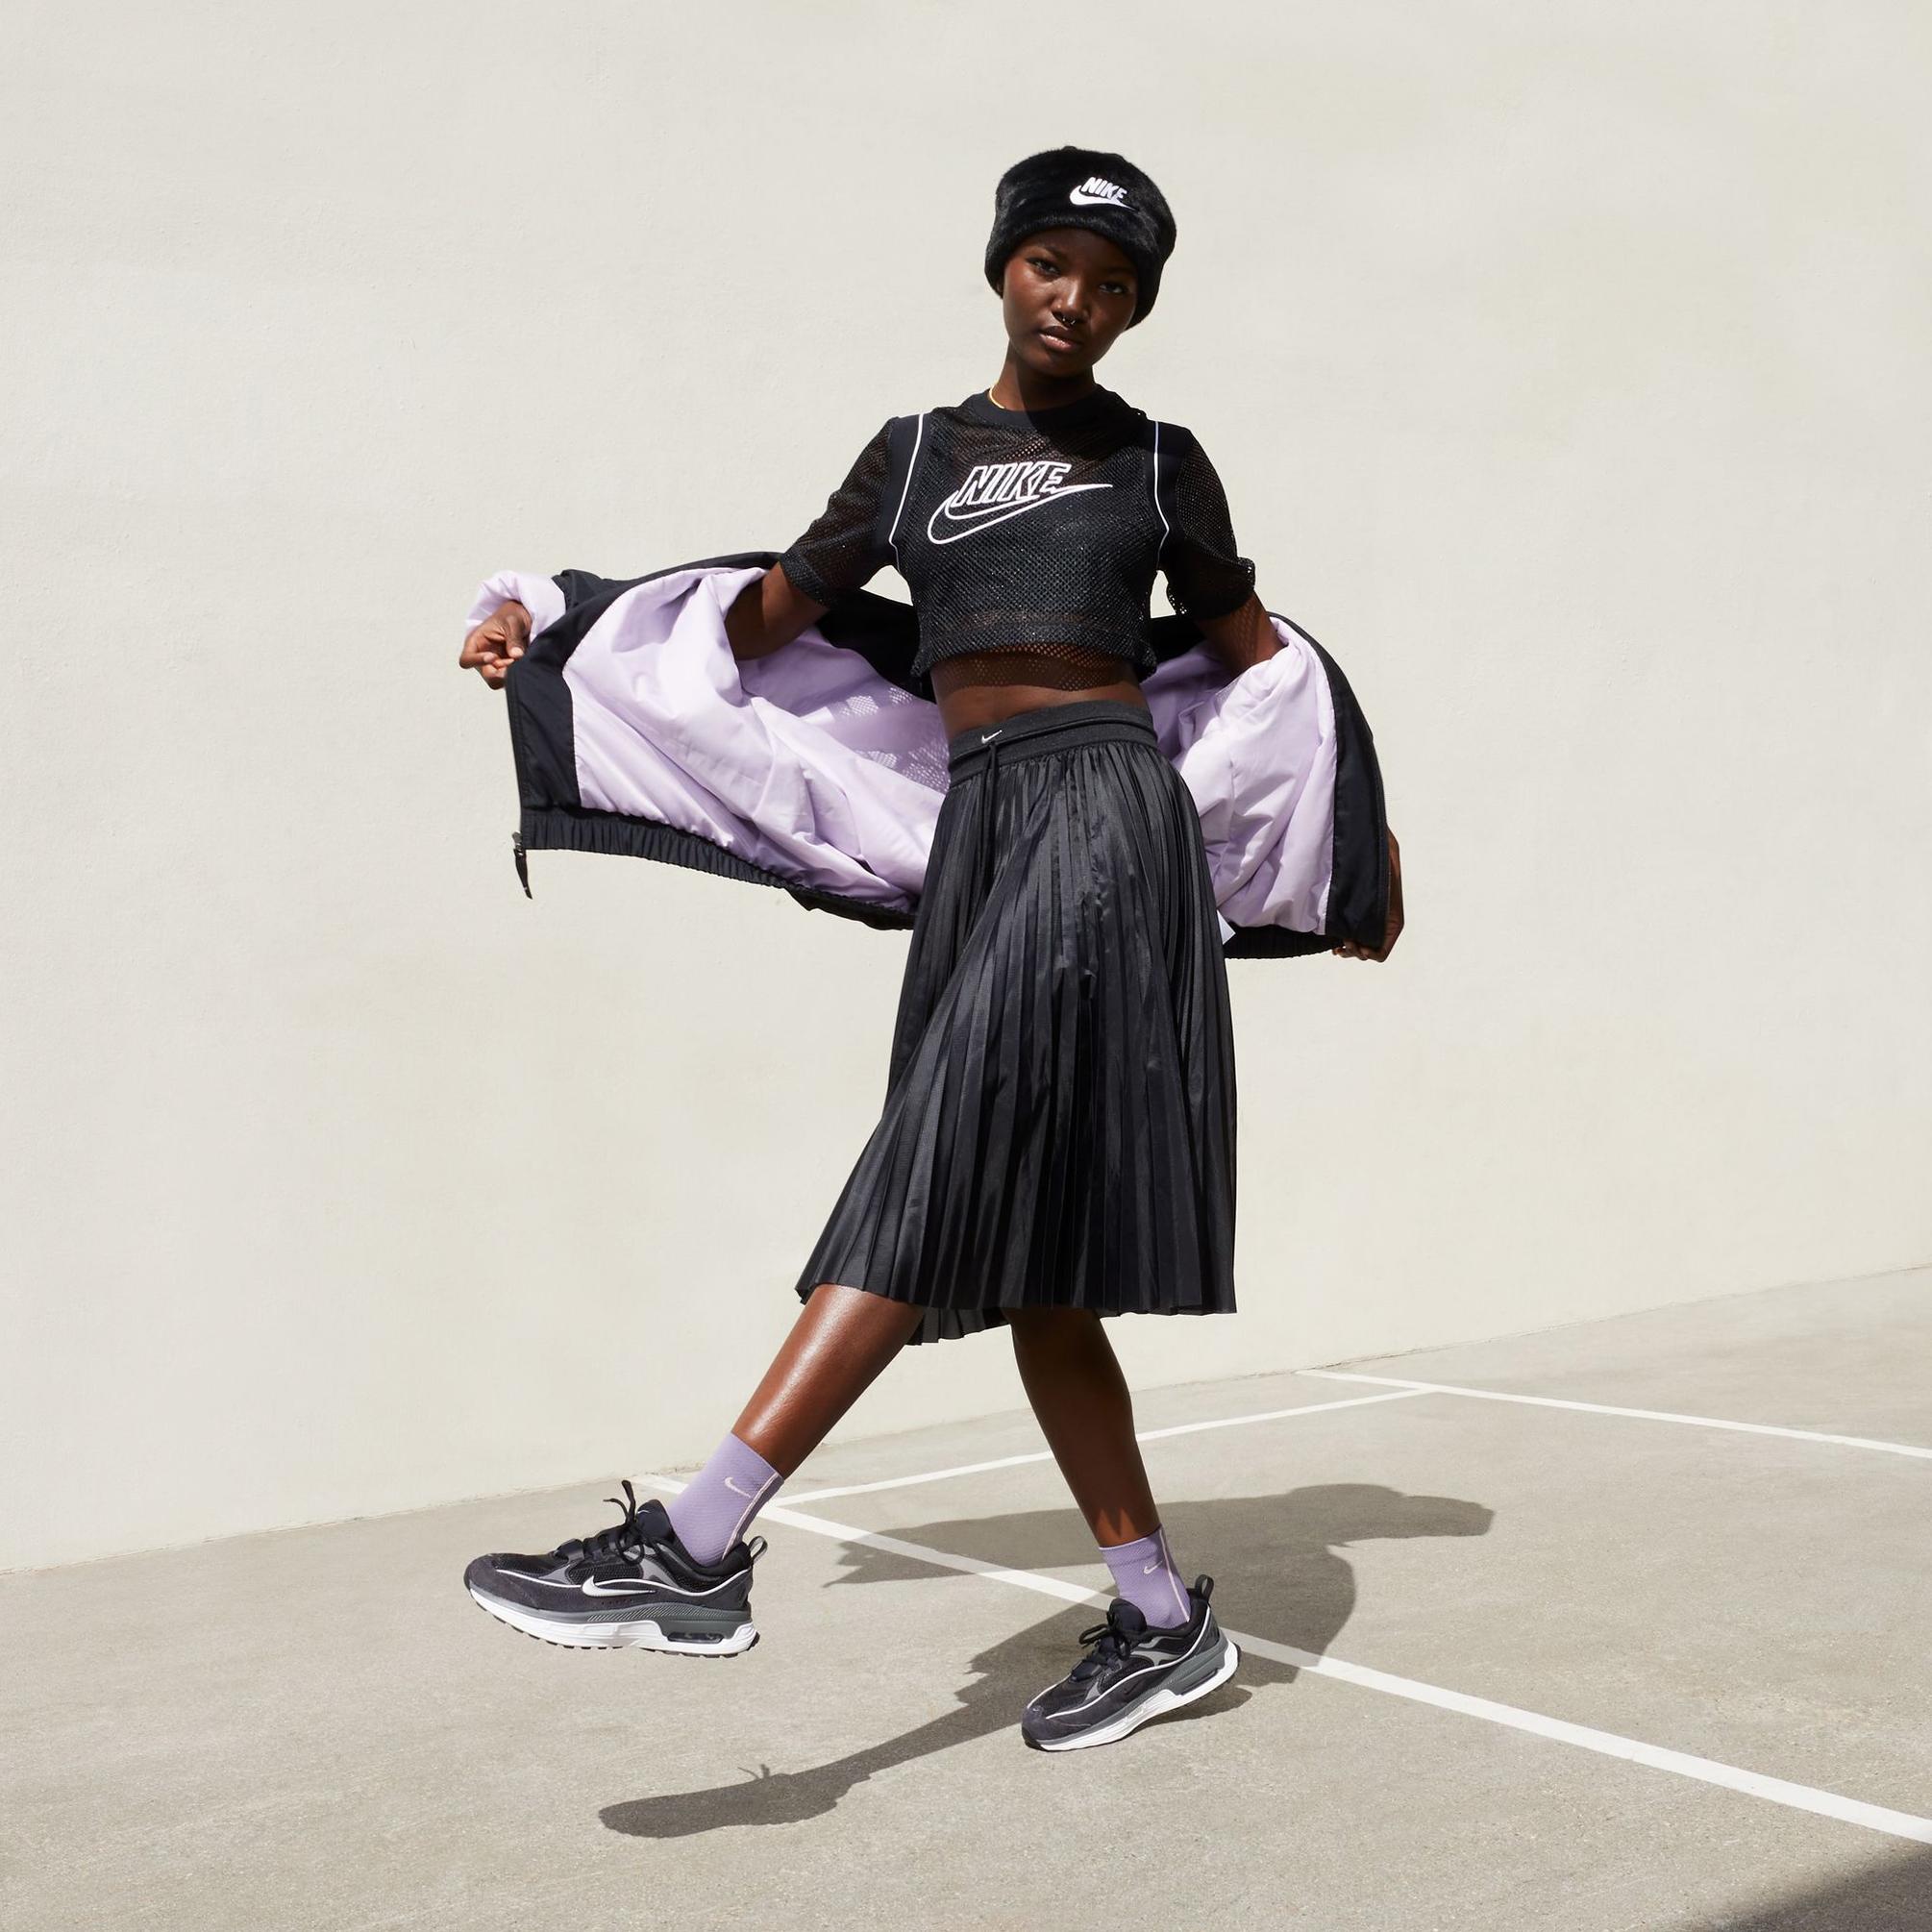  Nike Air Max Bliss Kadın Siyah Spor Ayakkabı